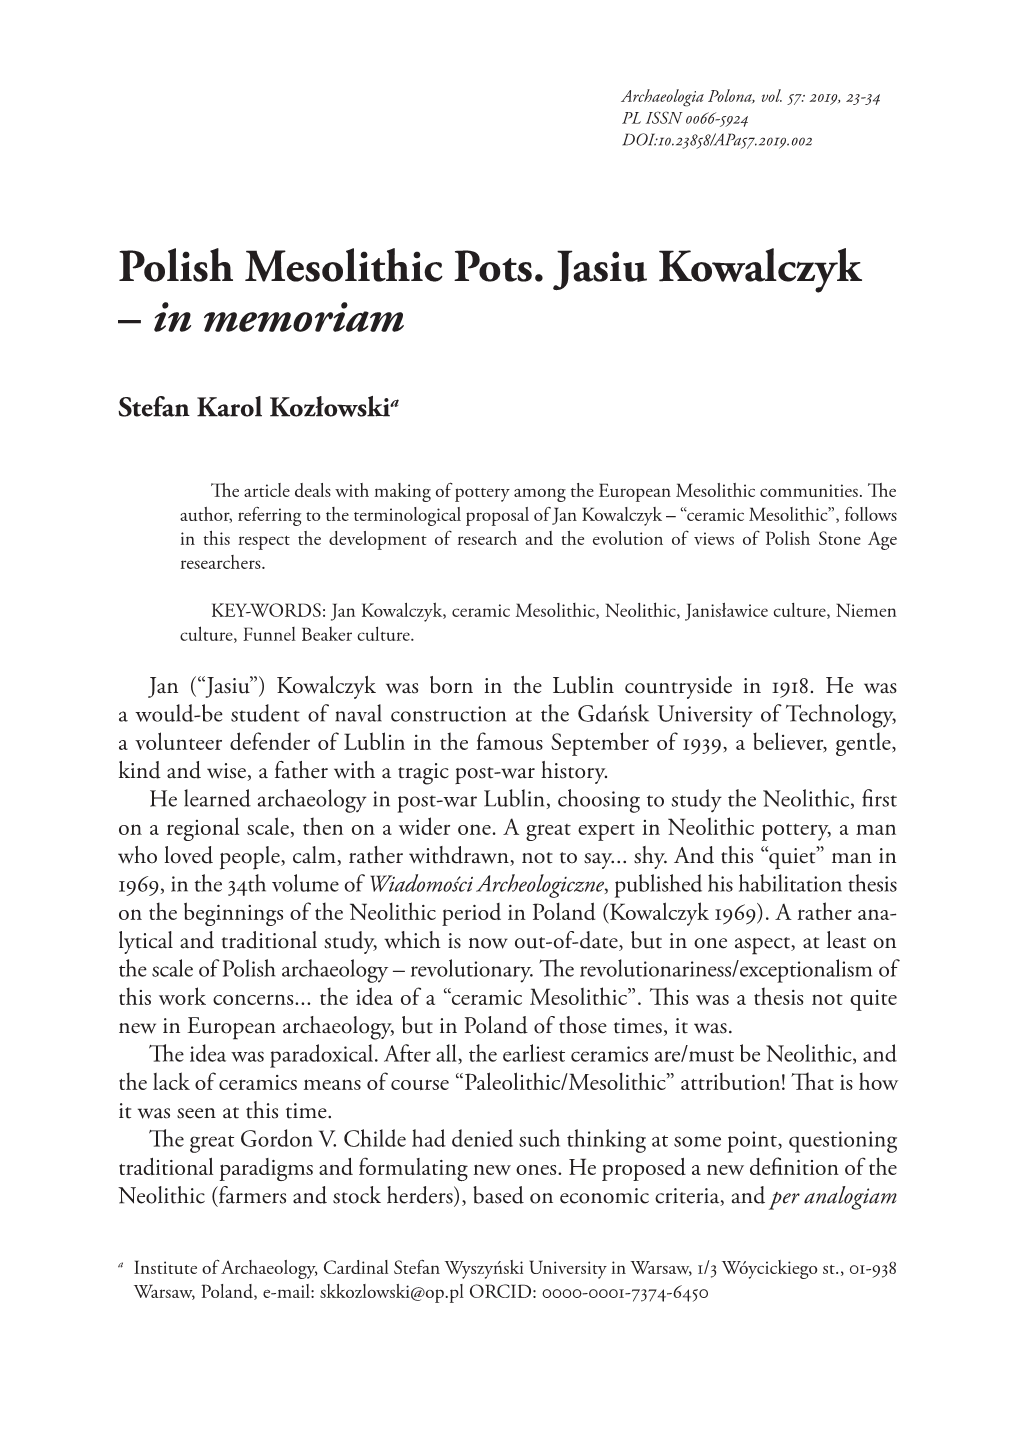 Polish Mesolithic Pots. Jasiu Kowalczyk – in Memoriam